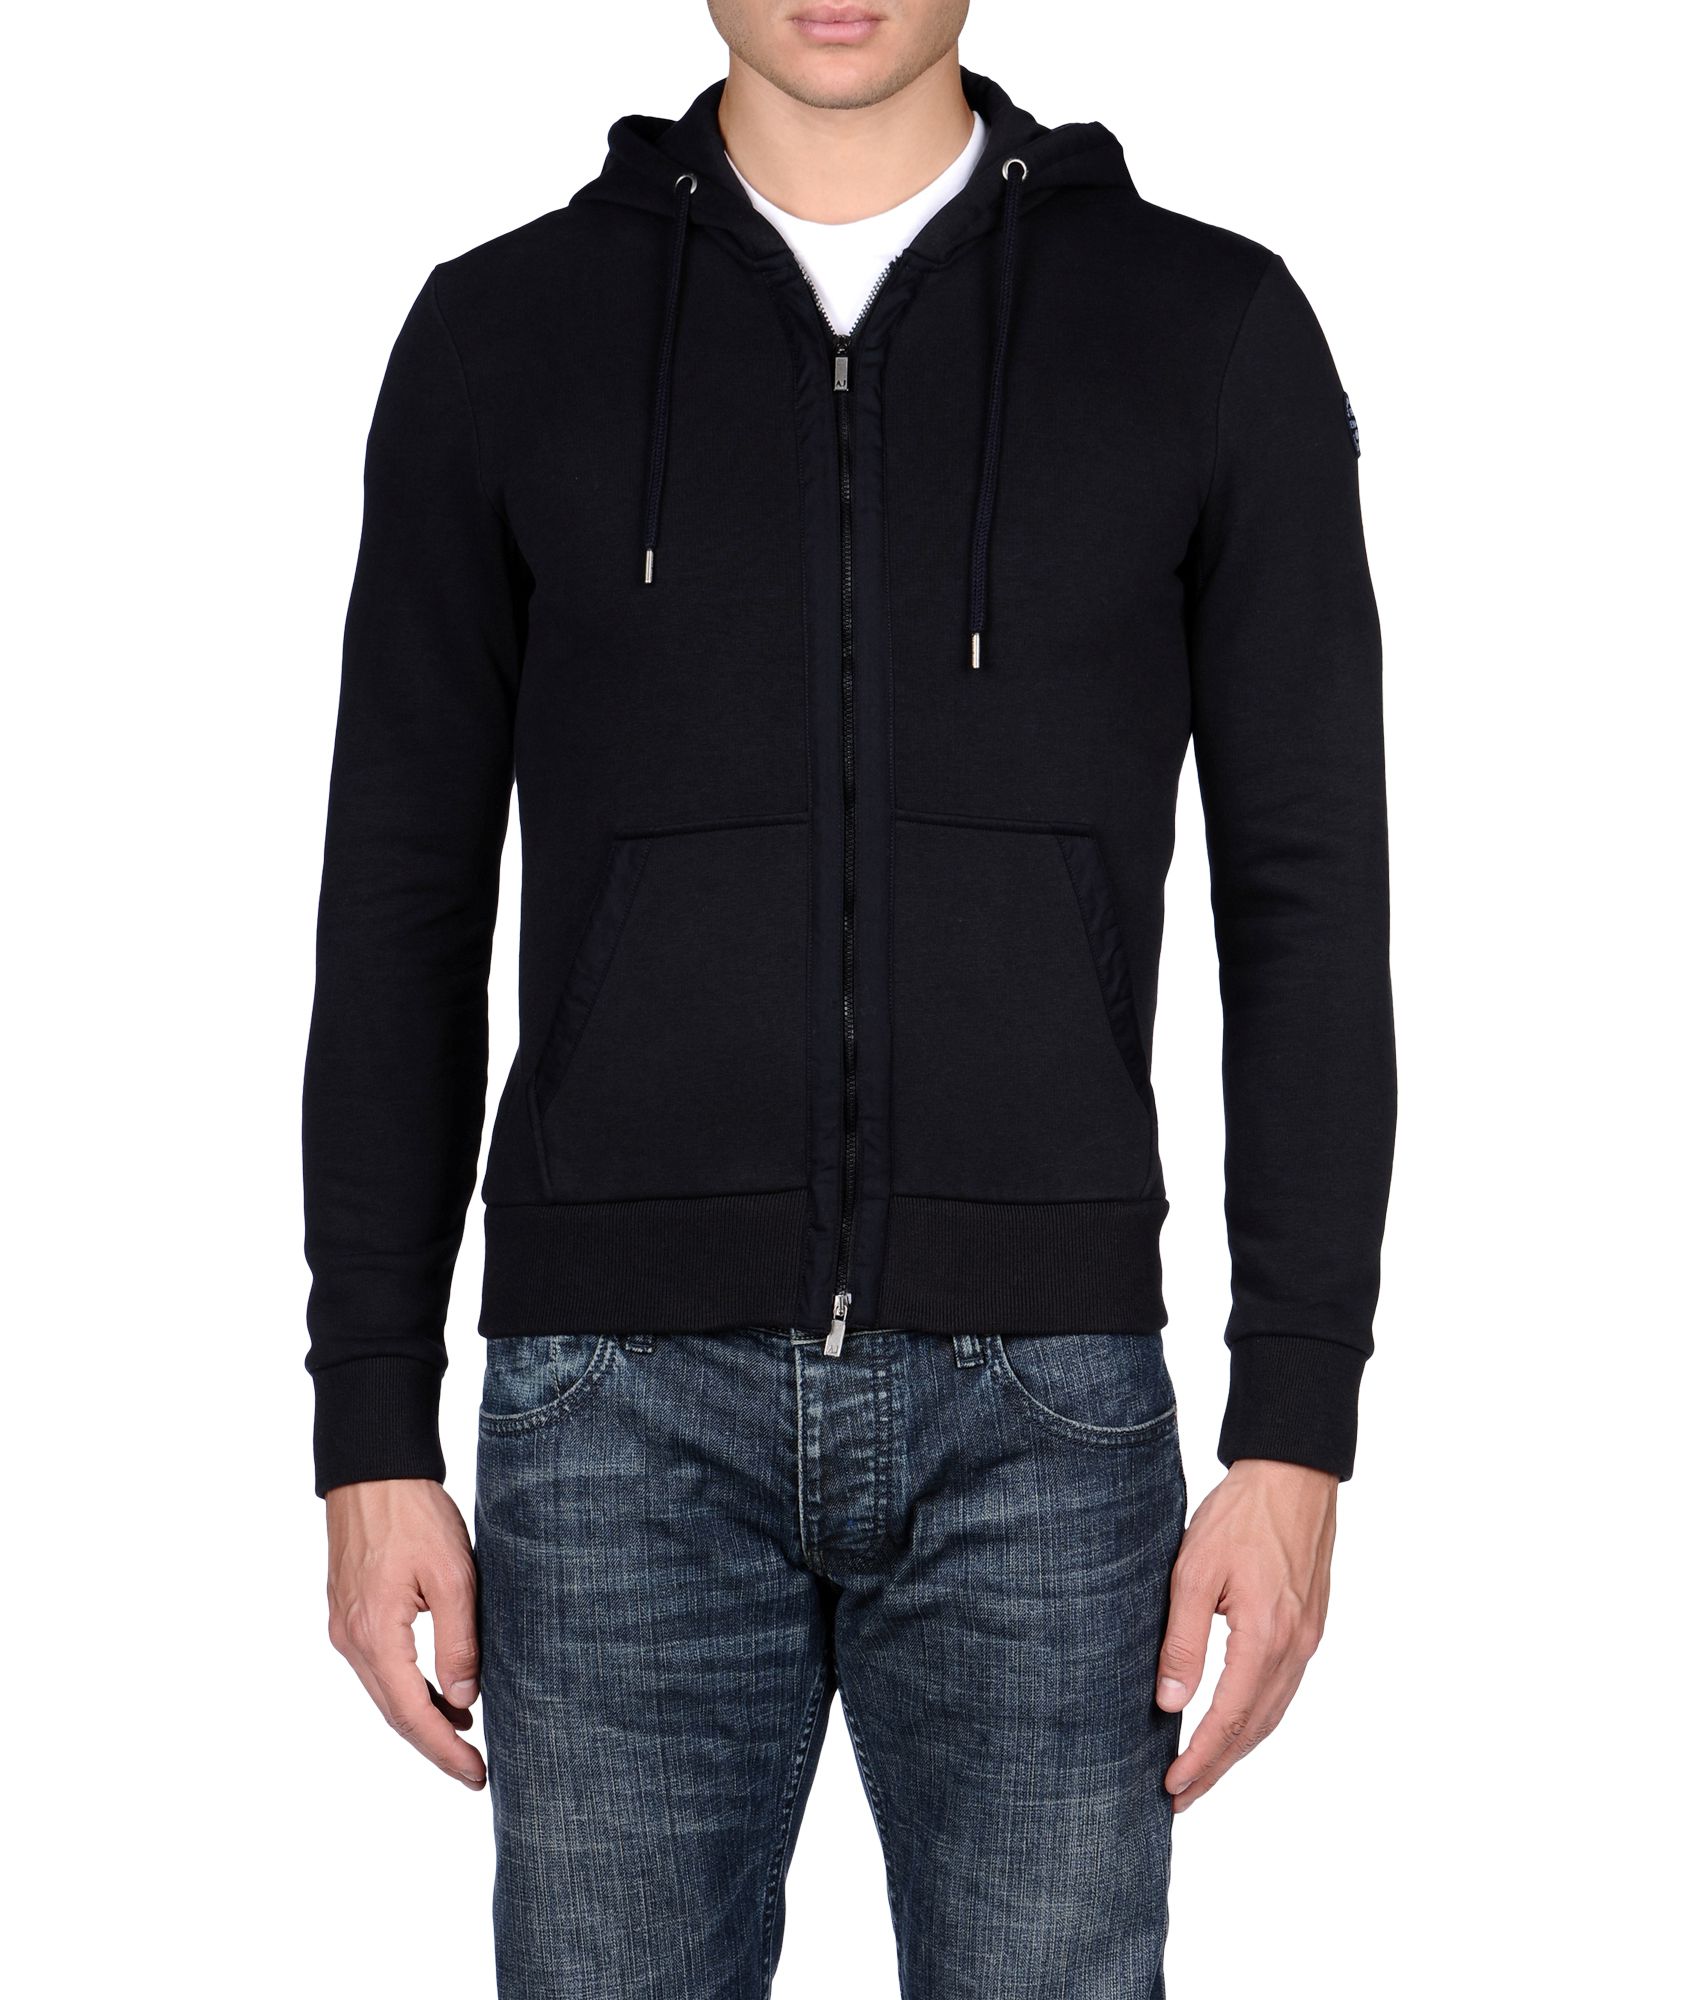 Lyst - Armani Jeans Hoodie in Black for Men